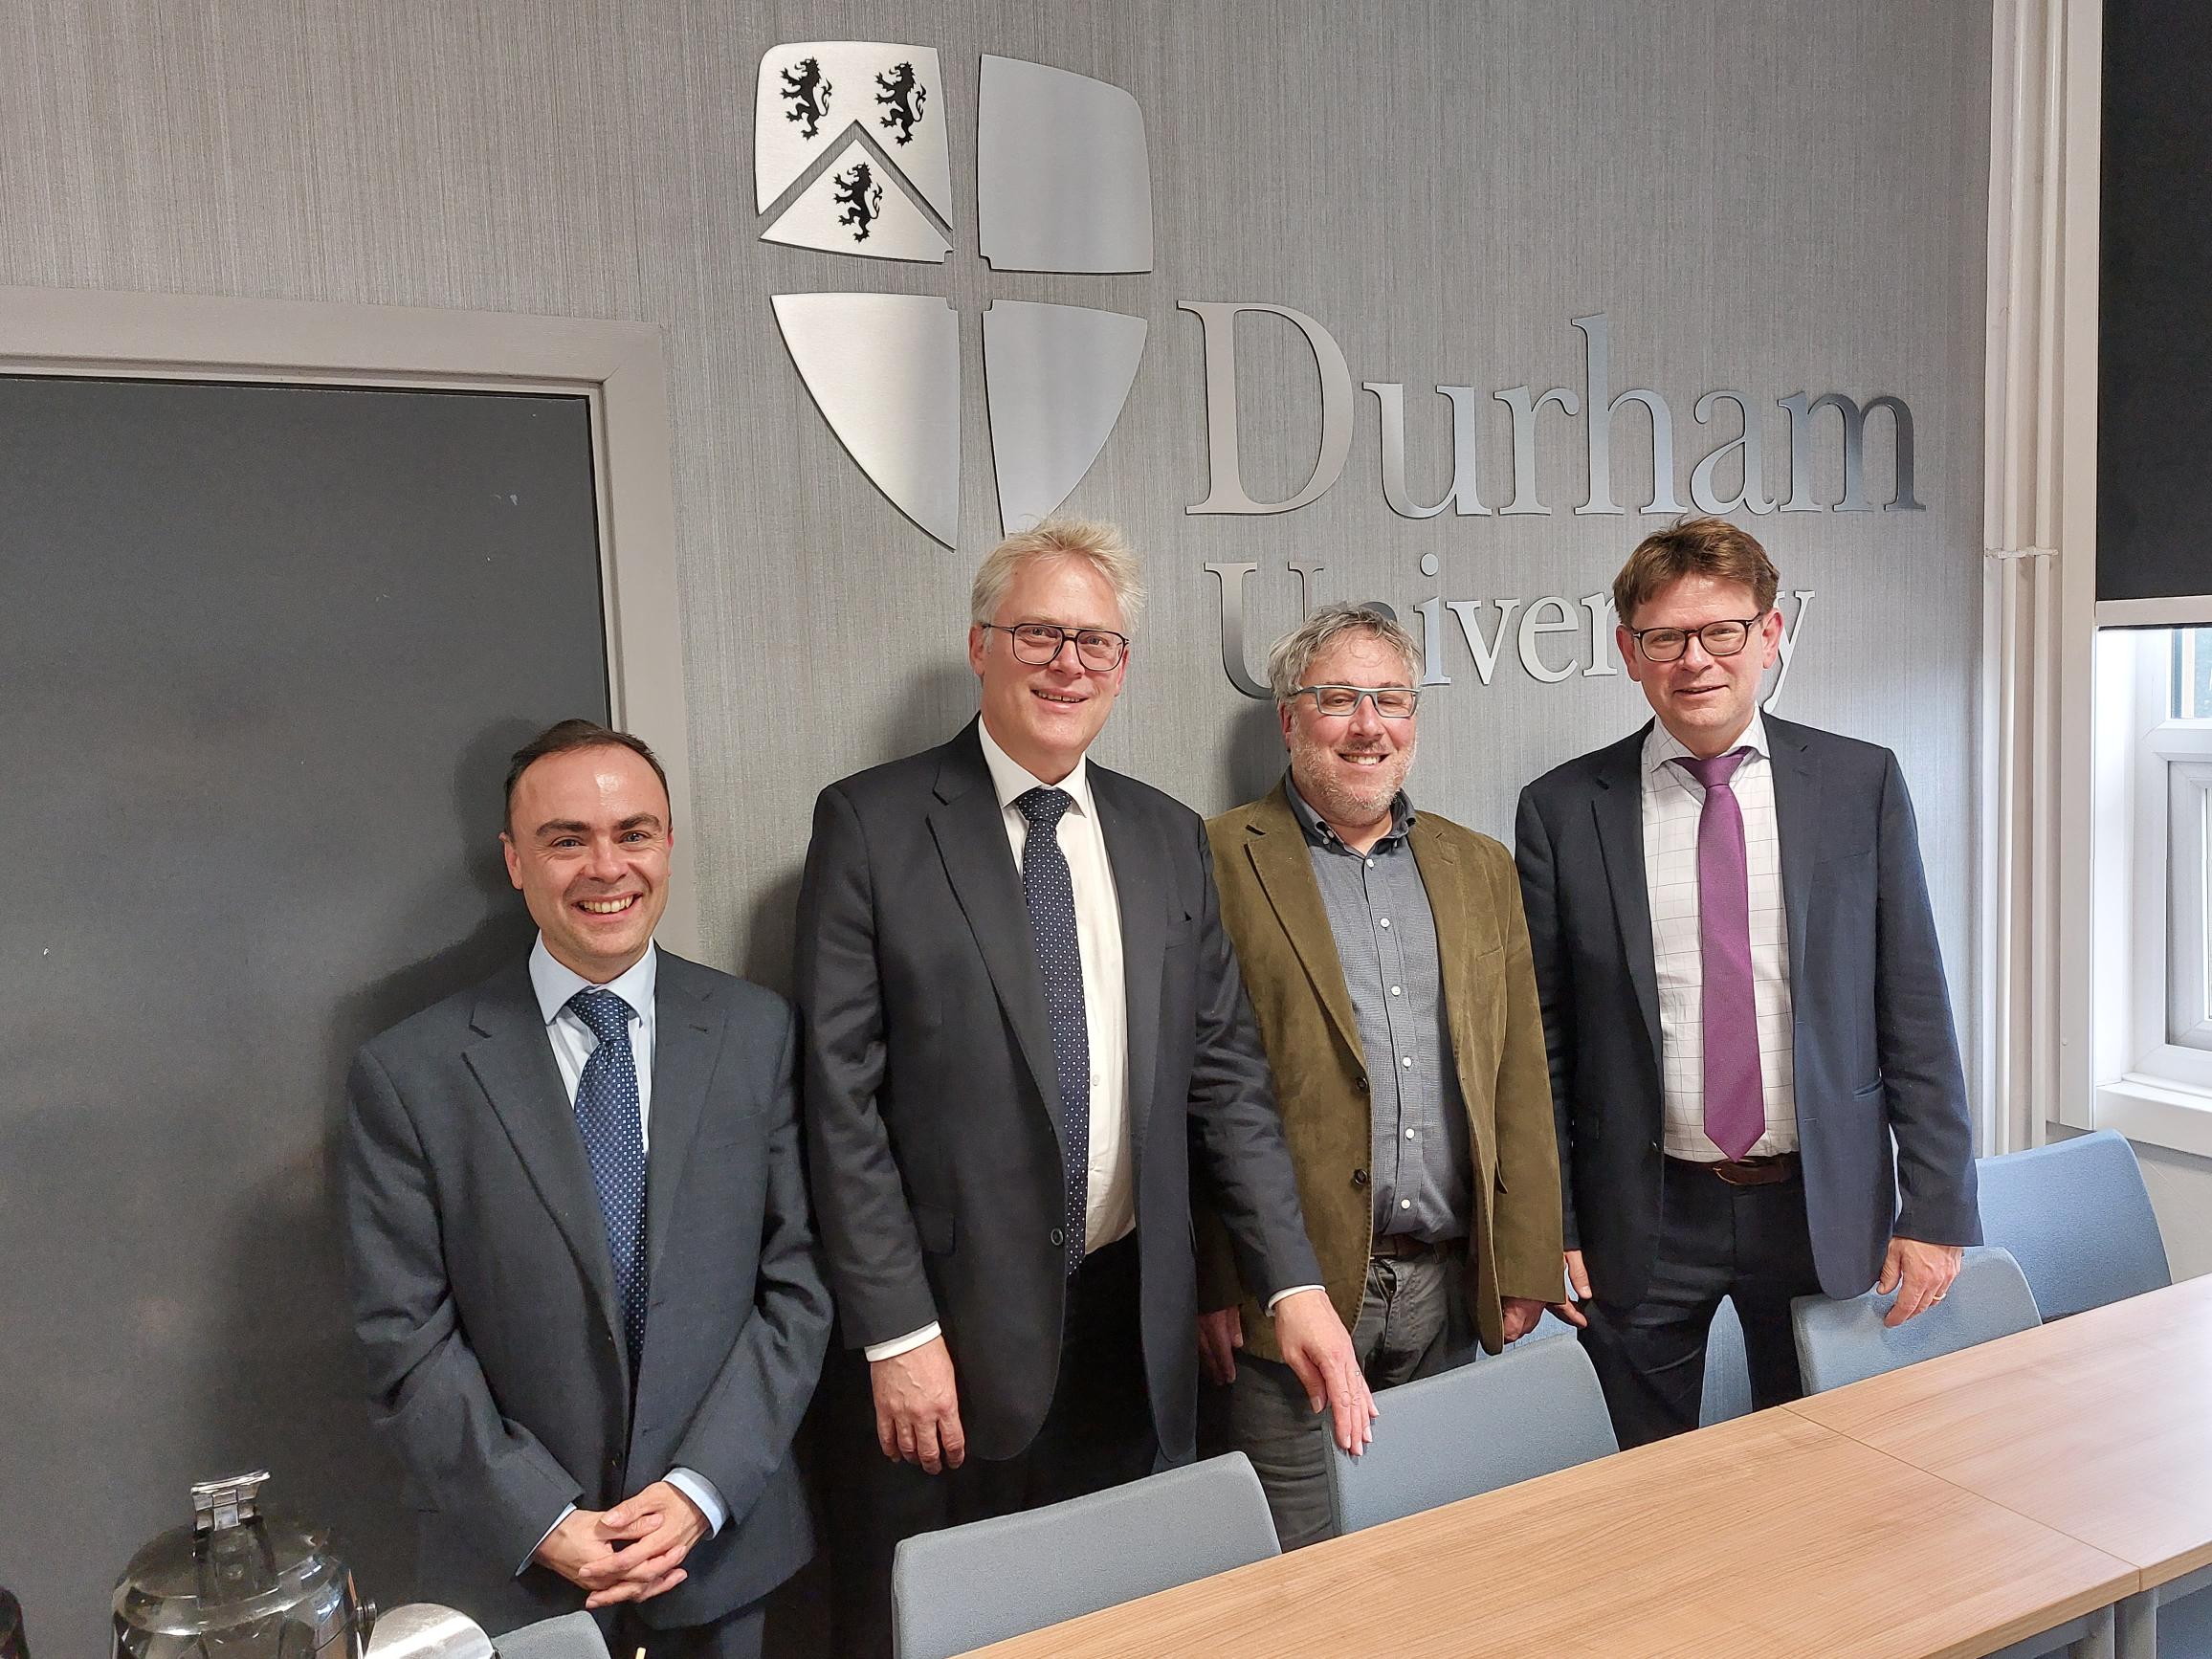 Durham University and Norwegian Embassy delegates